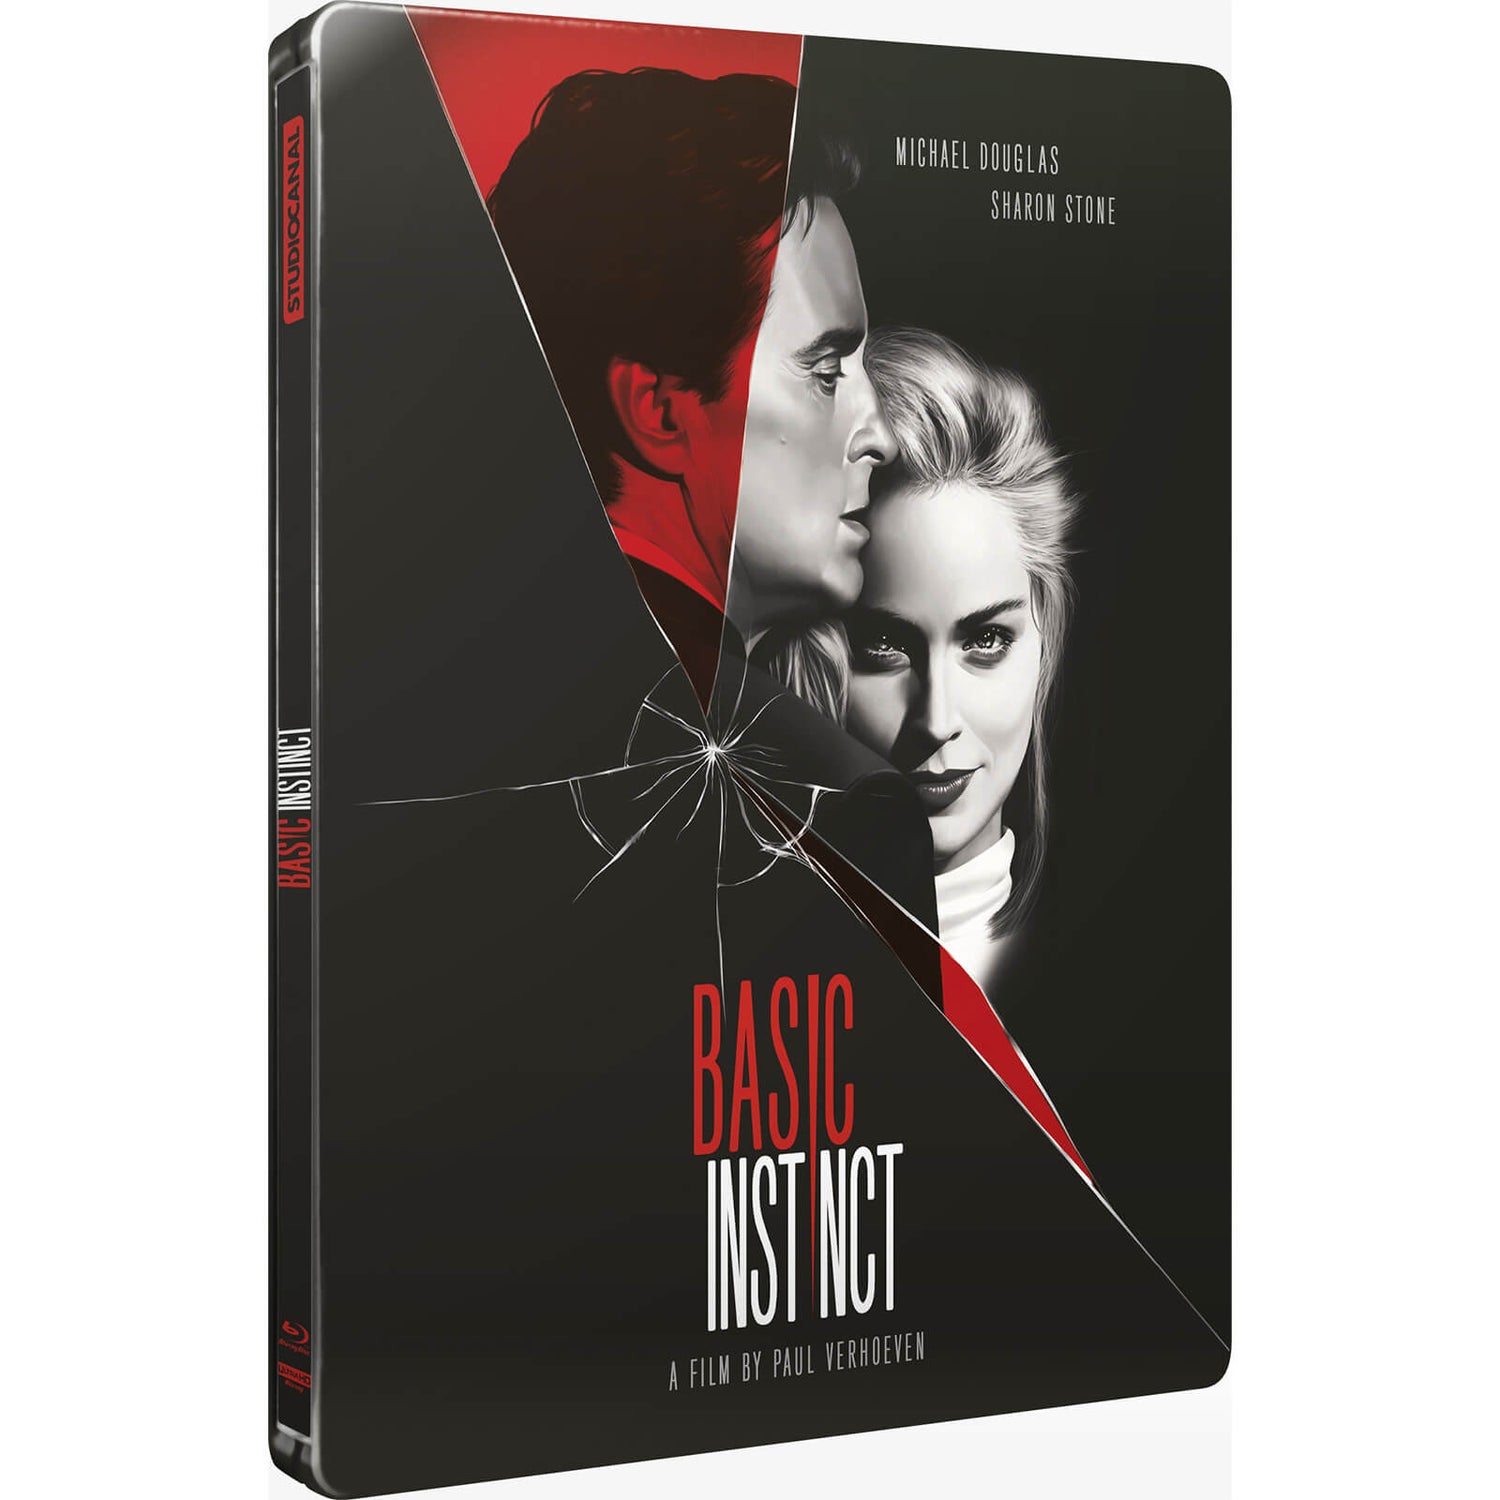 Basic Instinct 4K Ultra HD Steelbook (includes Blu-ray)